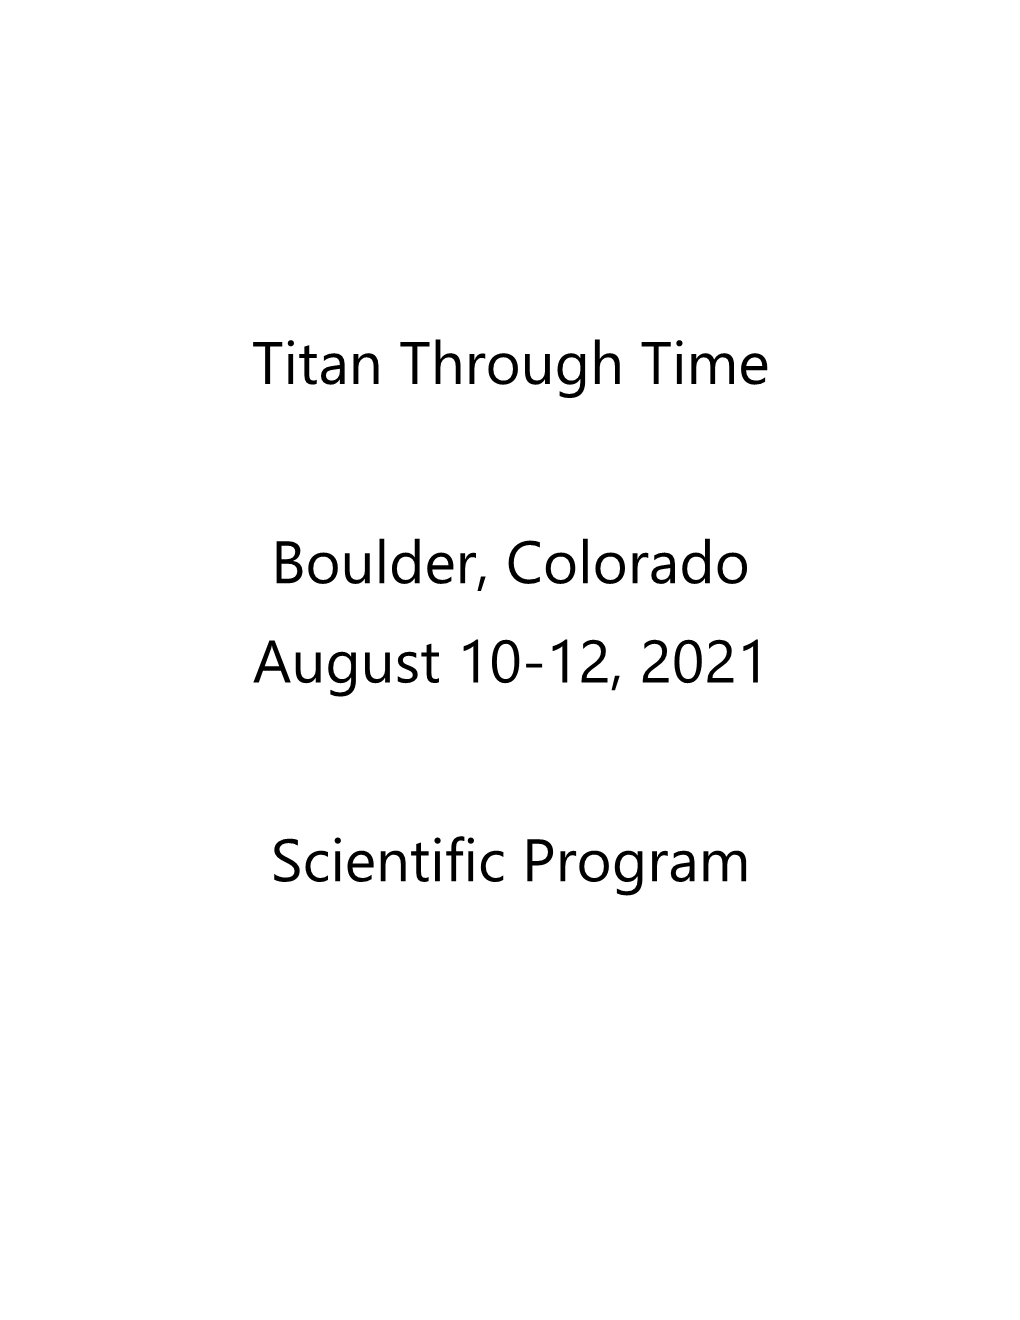 Titan Through Time Boulder, Colorado August 10-12, 2021 Scientific Program